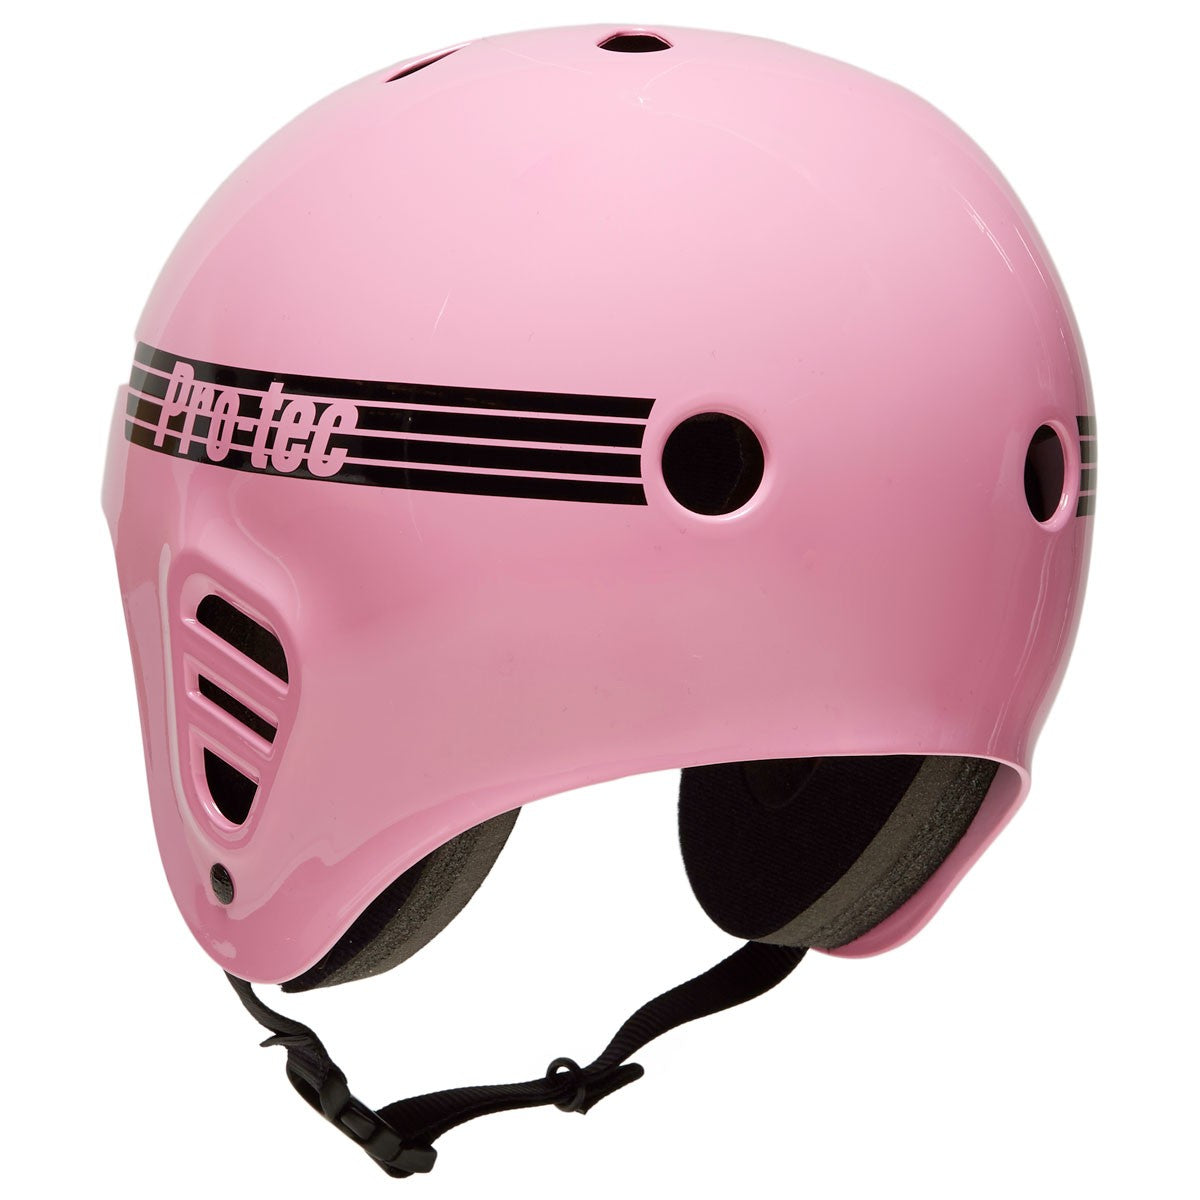 Capacete de skate Pro-Tec Skate-and-Skateboarding-Helmets Pro-Tec, Gloss  Black, X-Small